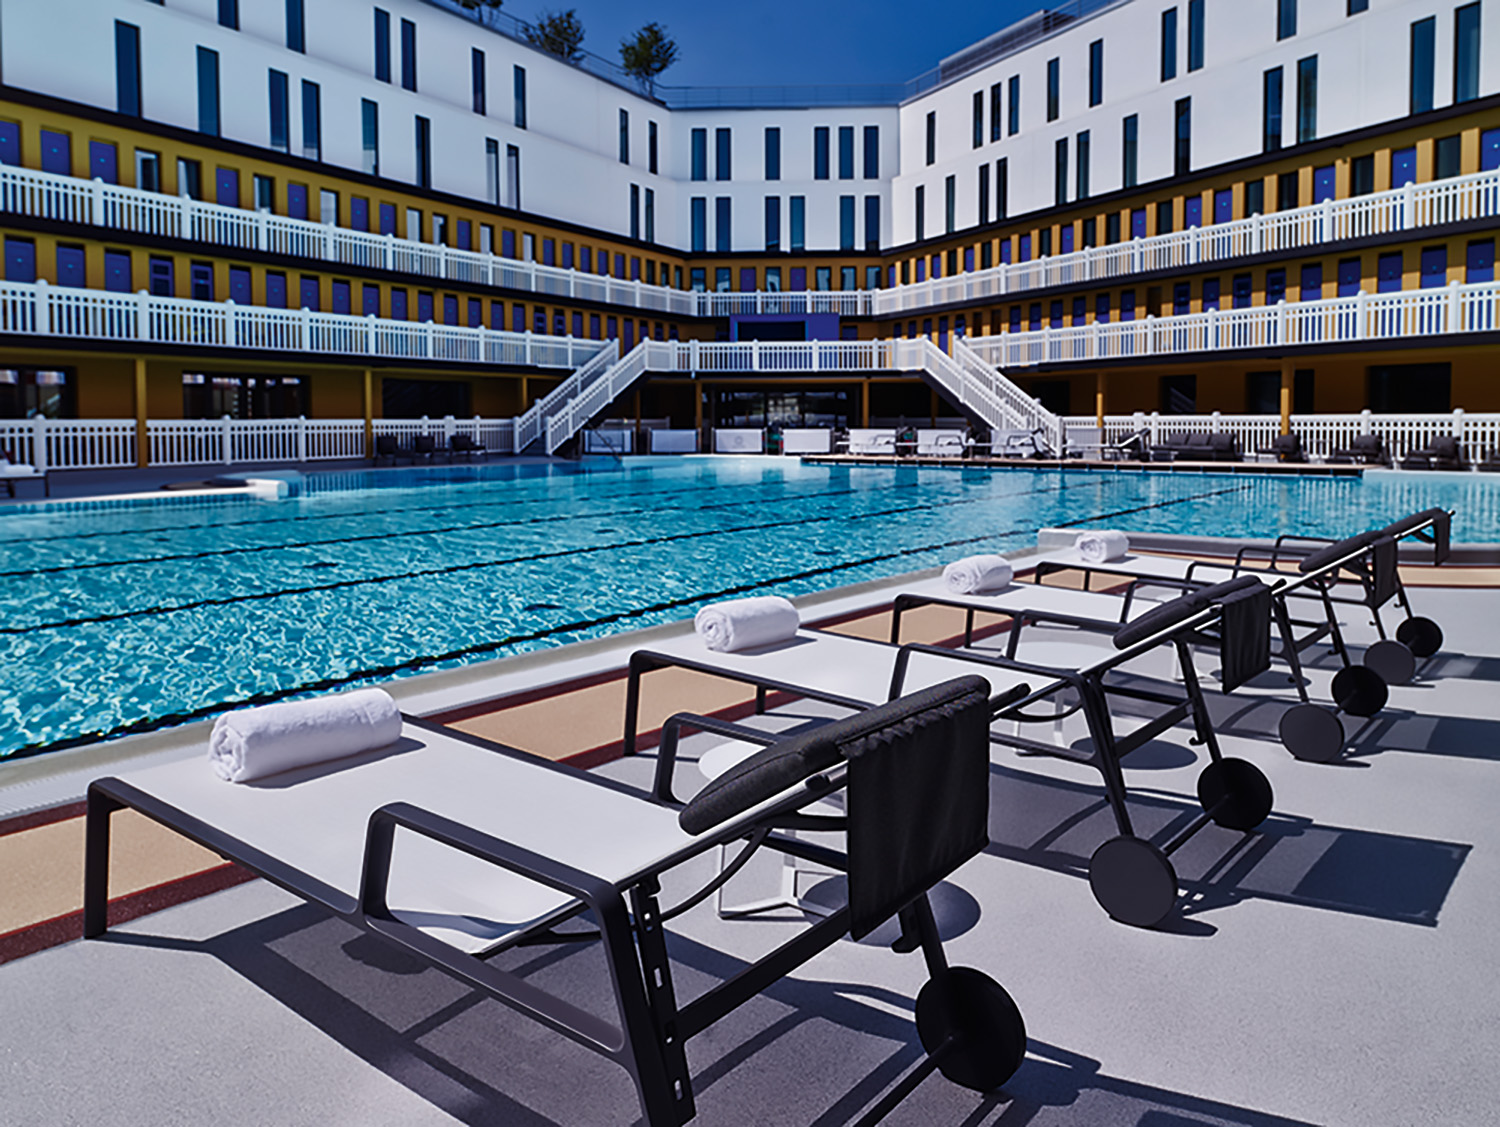 molitor hotel pool terrace, lifestyle hotel, paris 16ème, luxury interior, 5 star hotel, interior design, studio jean-philippe nuel,